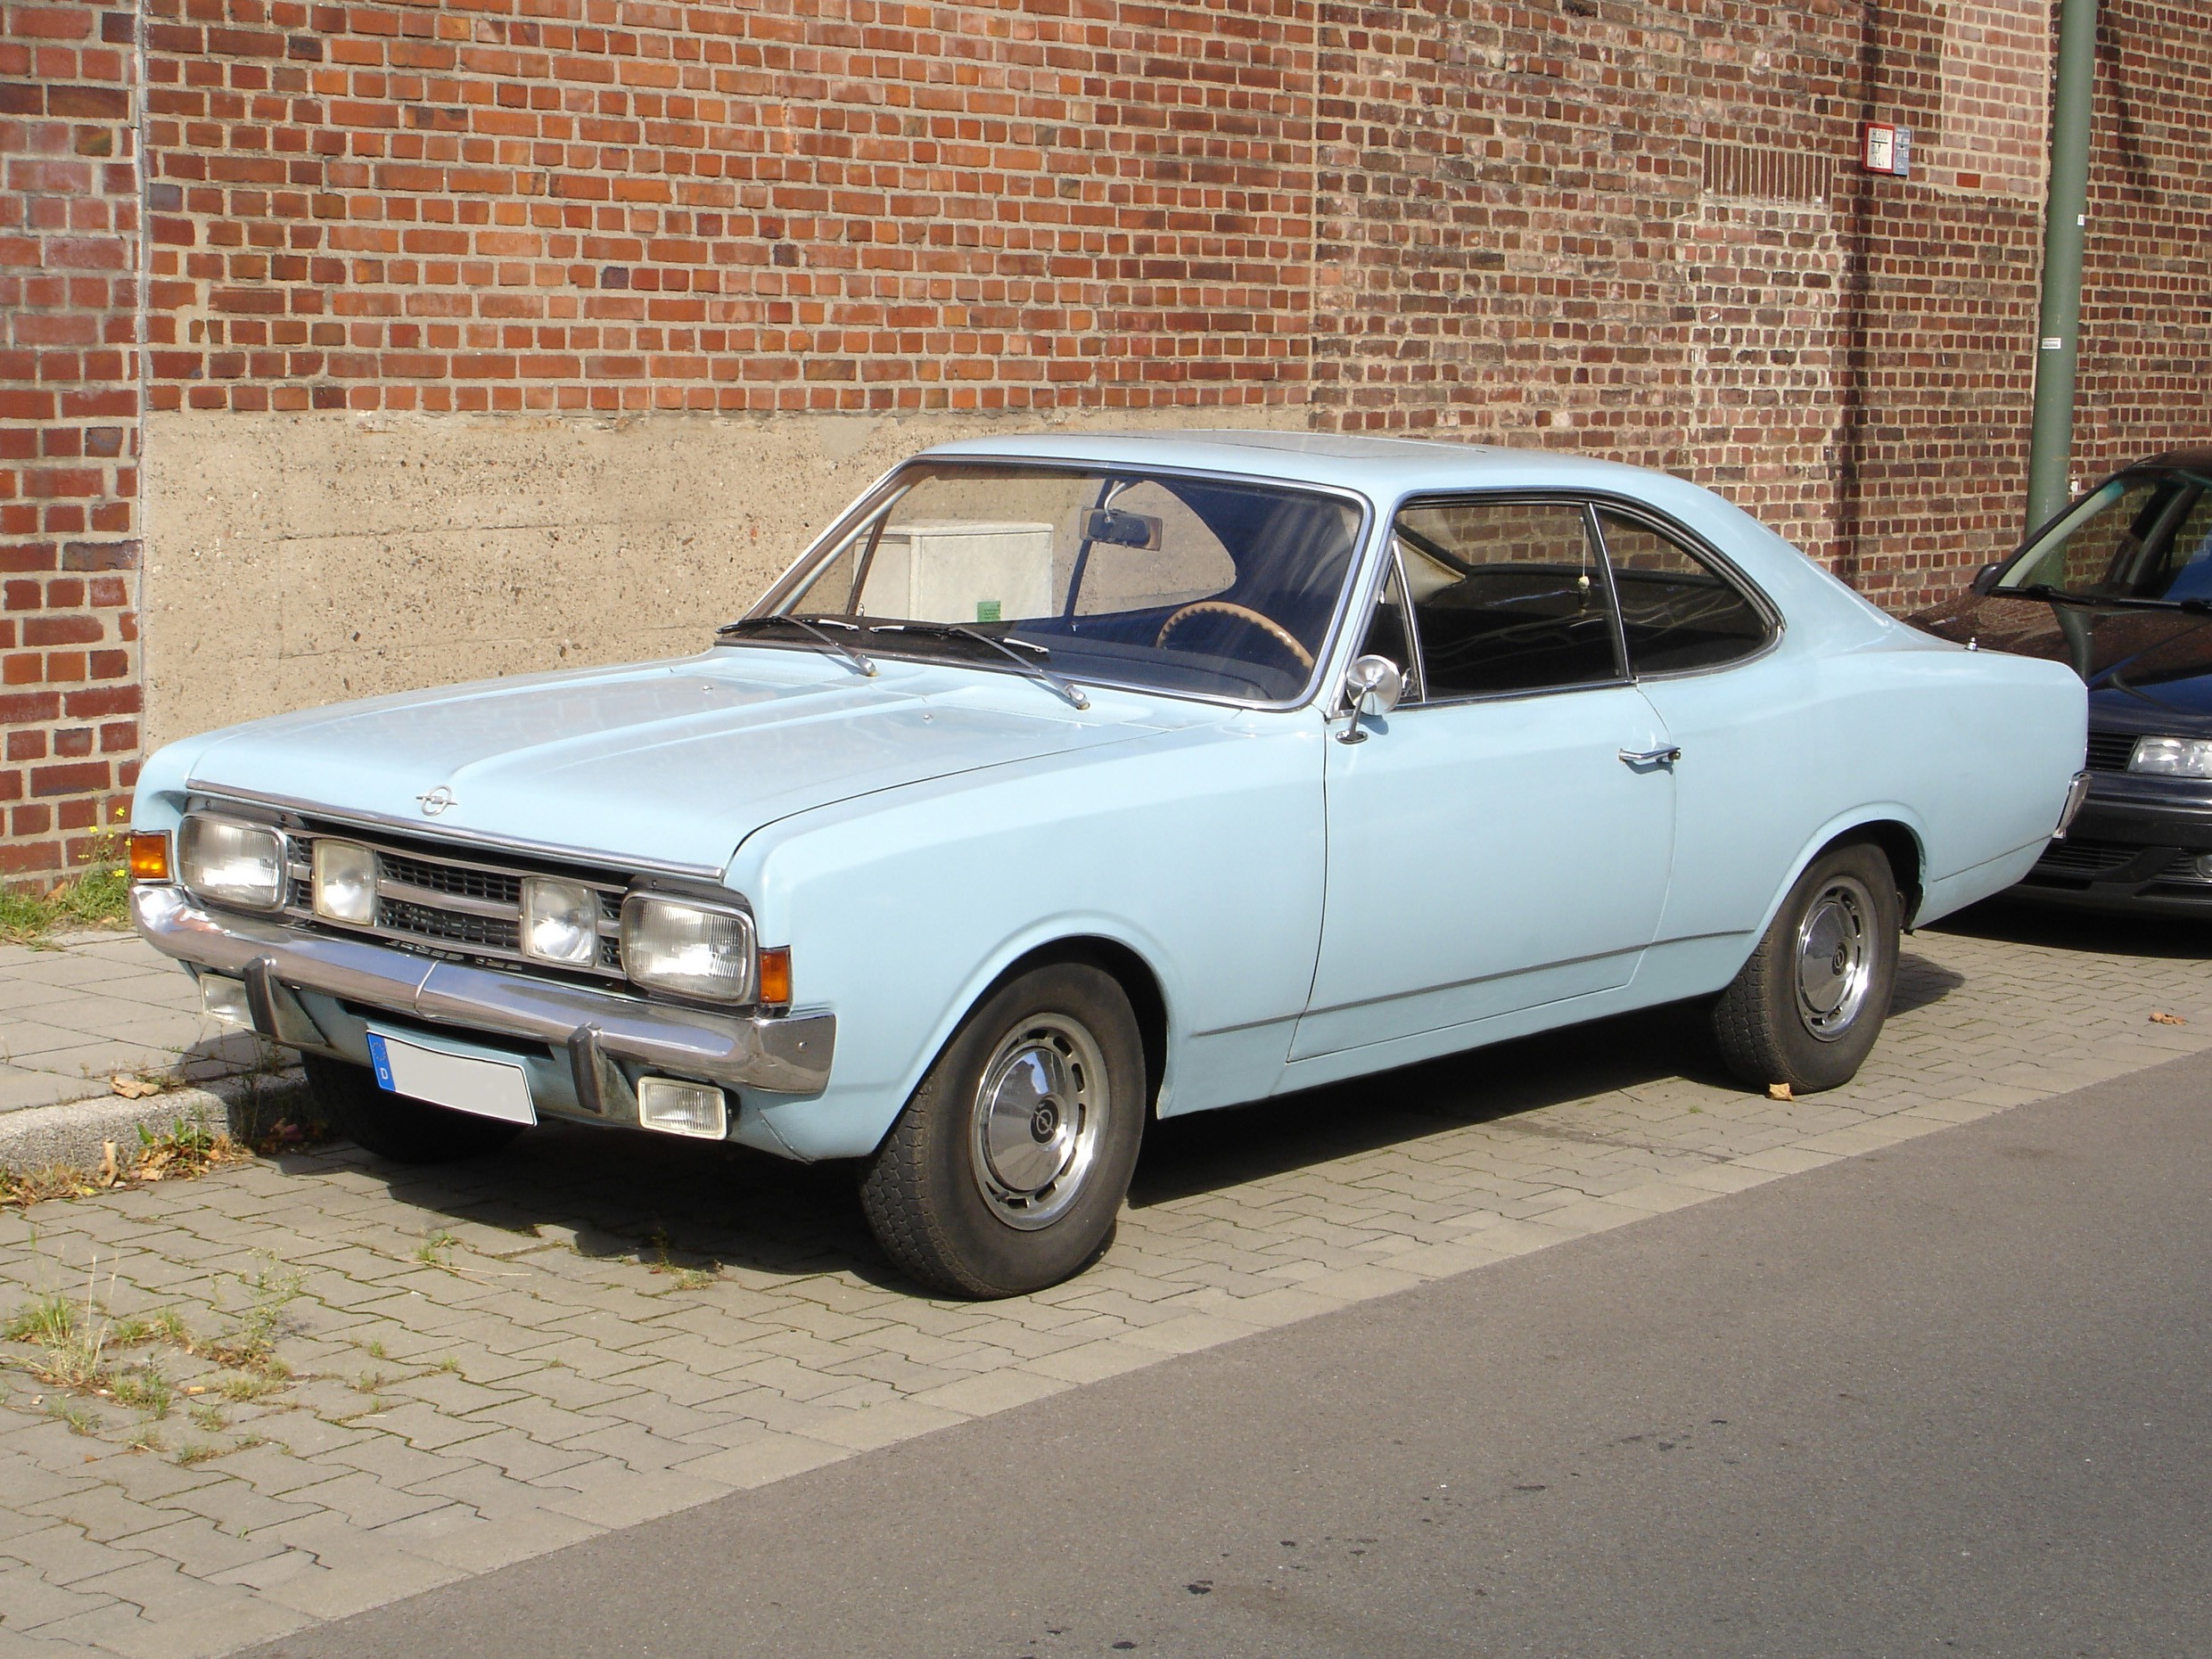 File:Opel-Rekord-C-Coupe.jpg - Wikimedia Commons